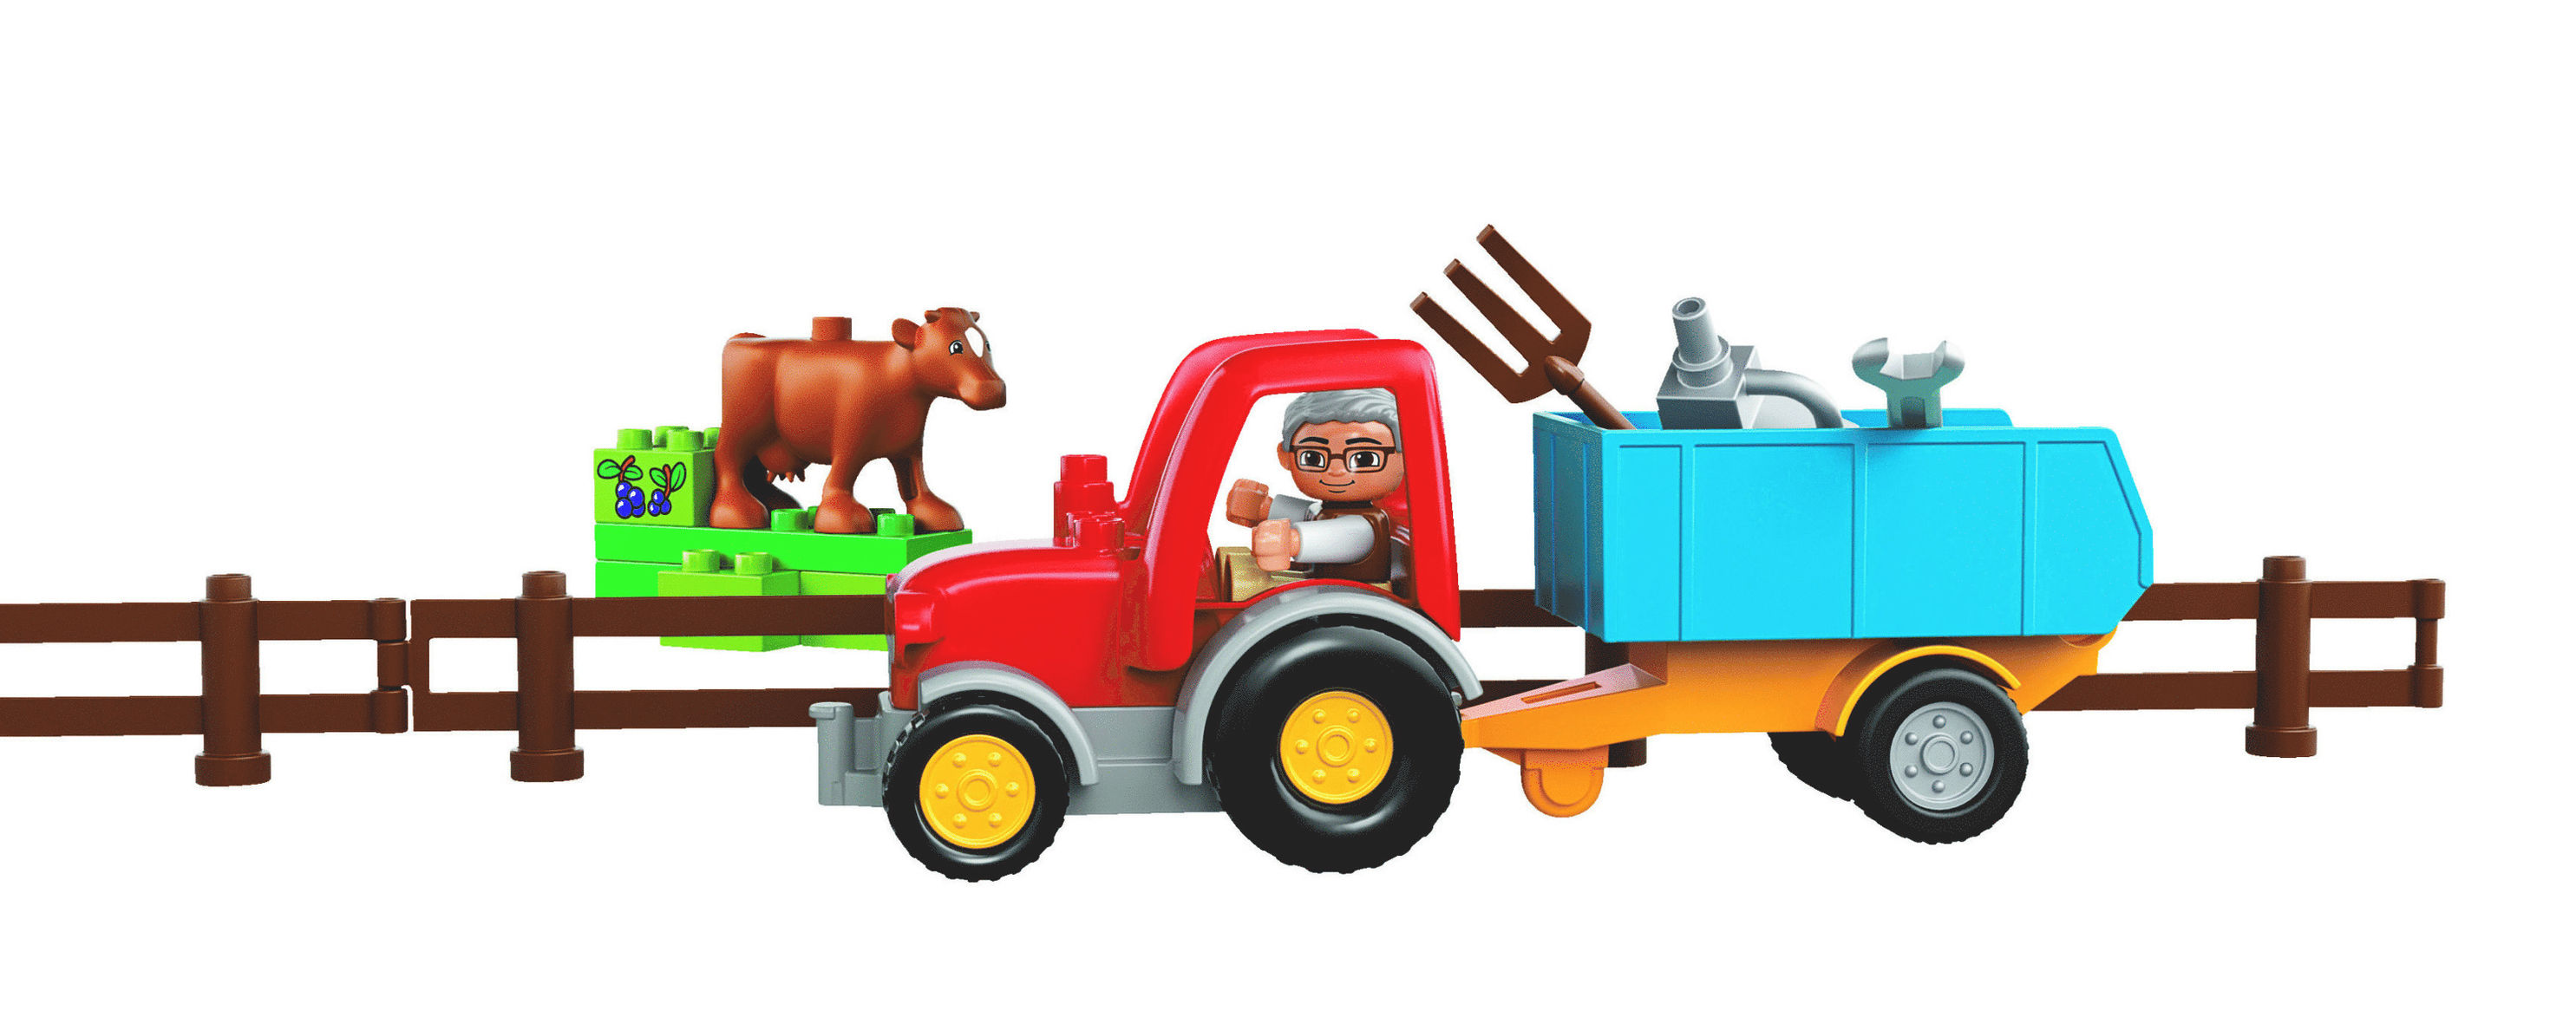 LEGO® 10524 DUPLO® - Bauernhof Traktor bestellen | Weltbild.de